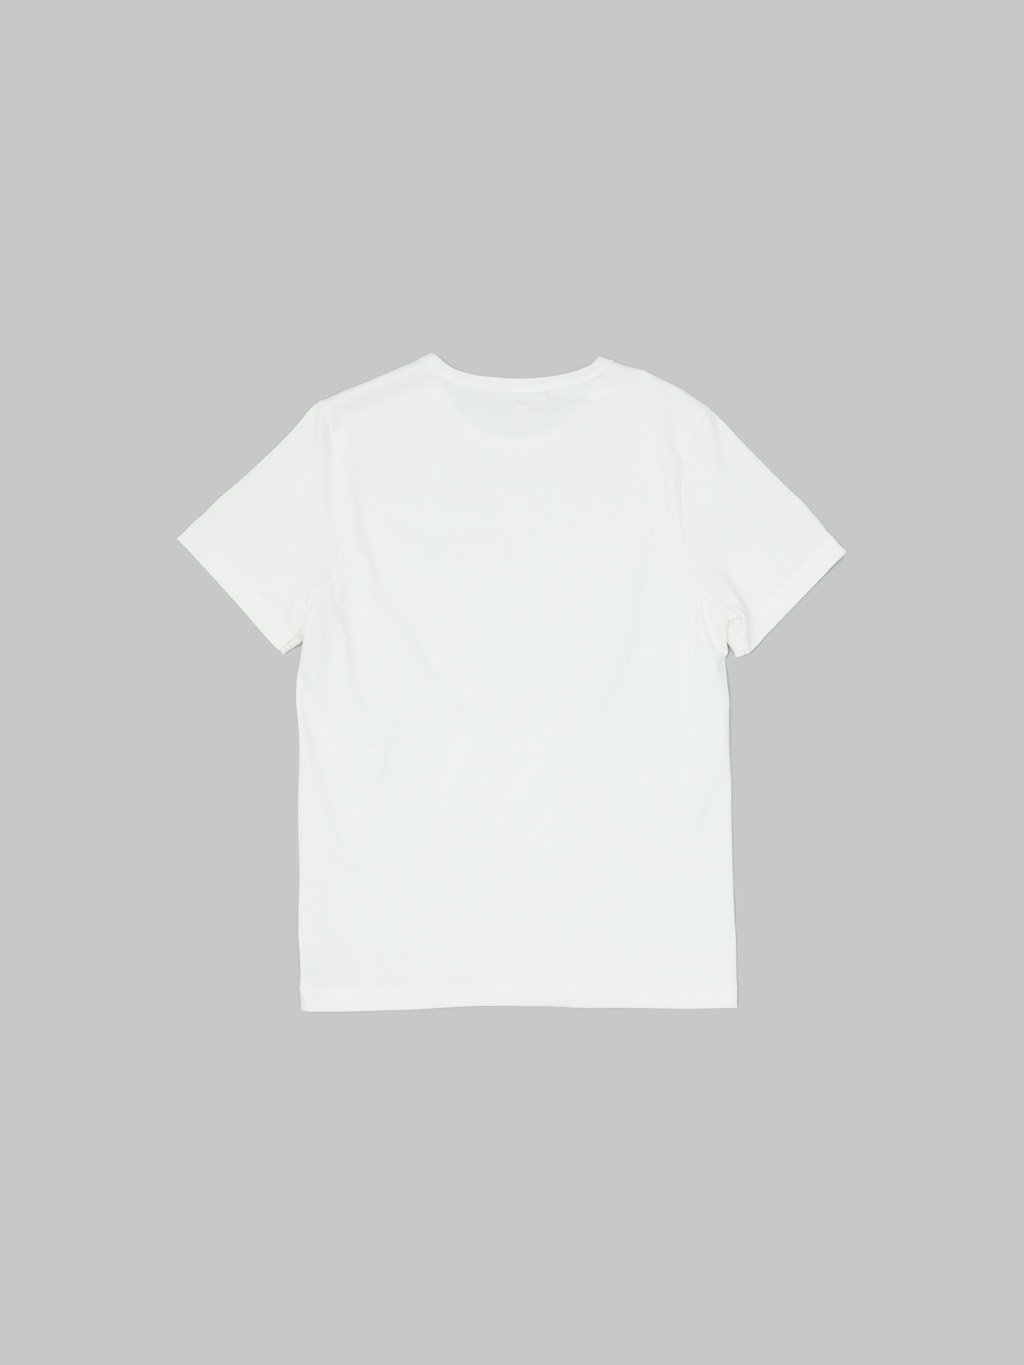 merz b schwanen good originals loopwheeled Tshirt classic white back